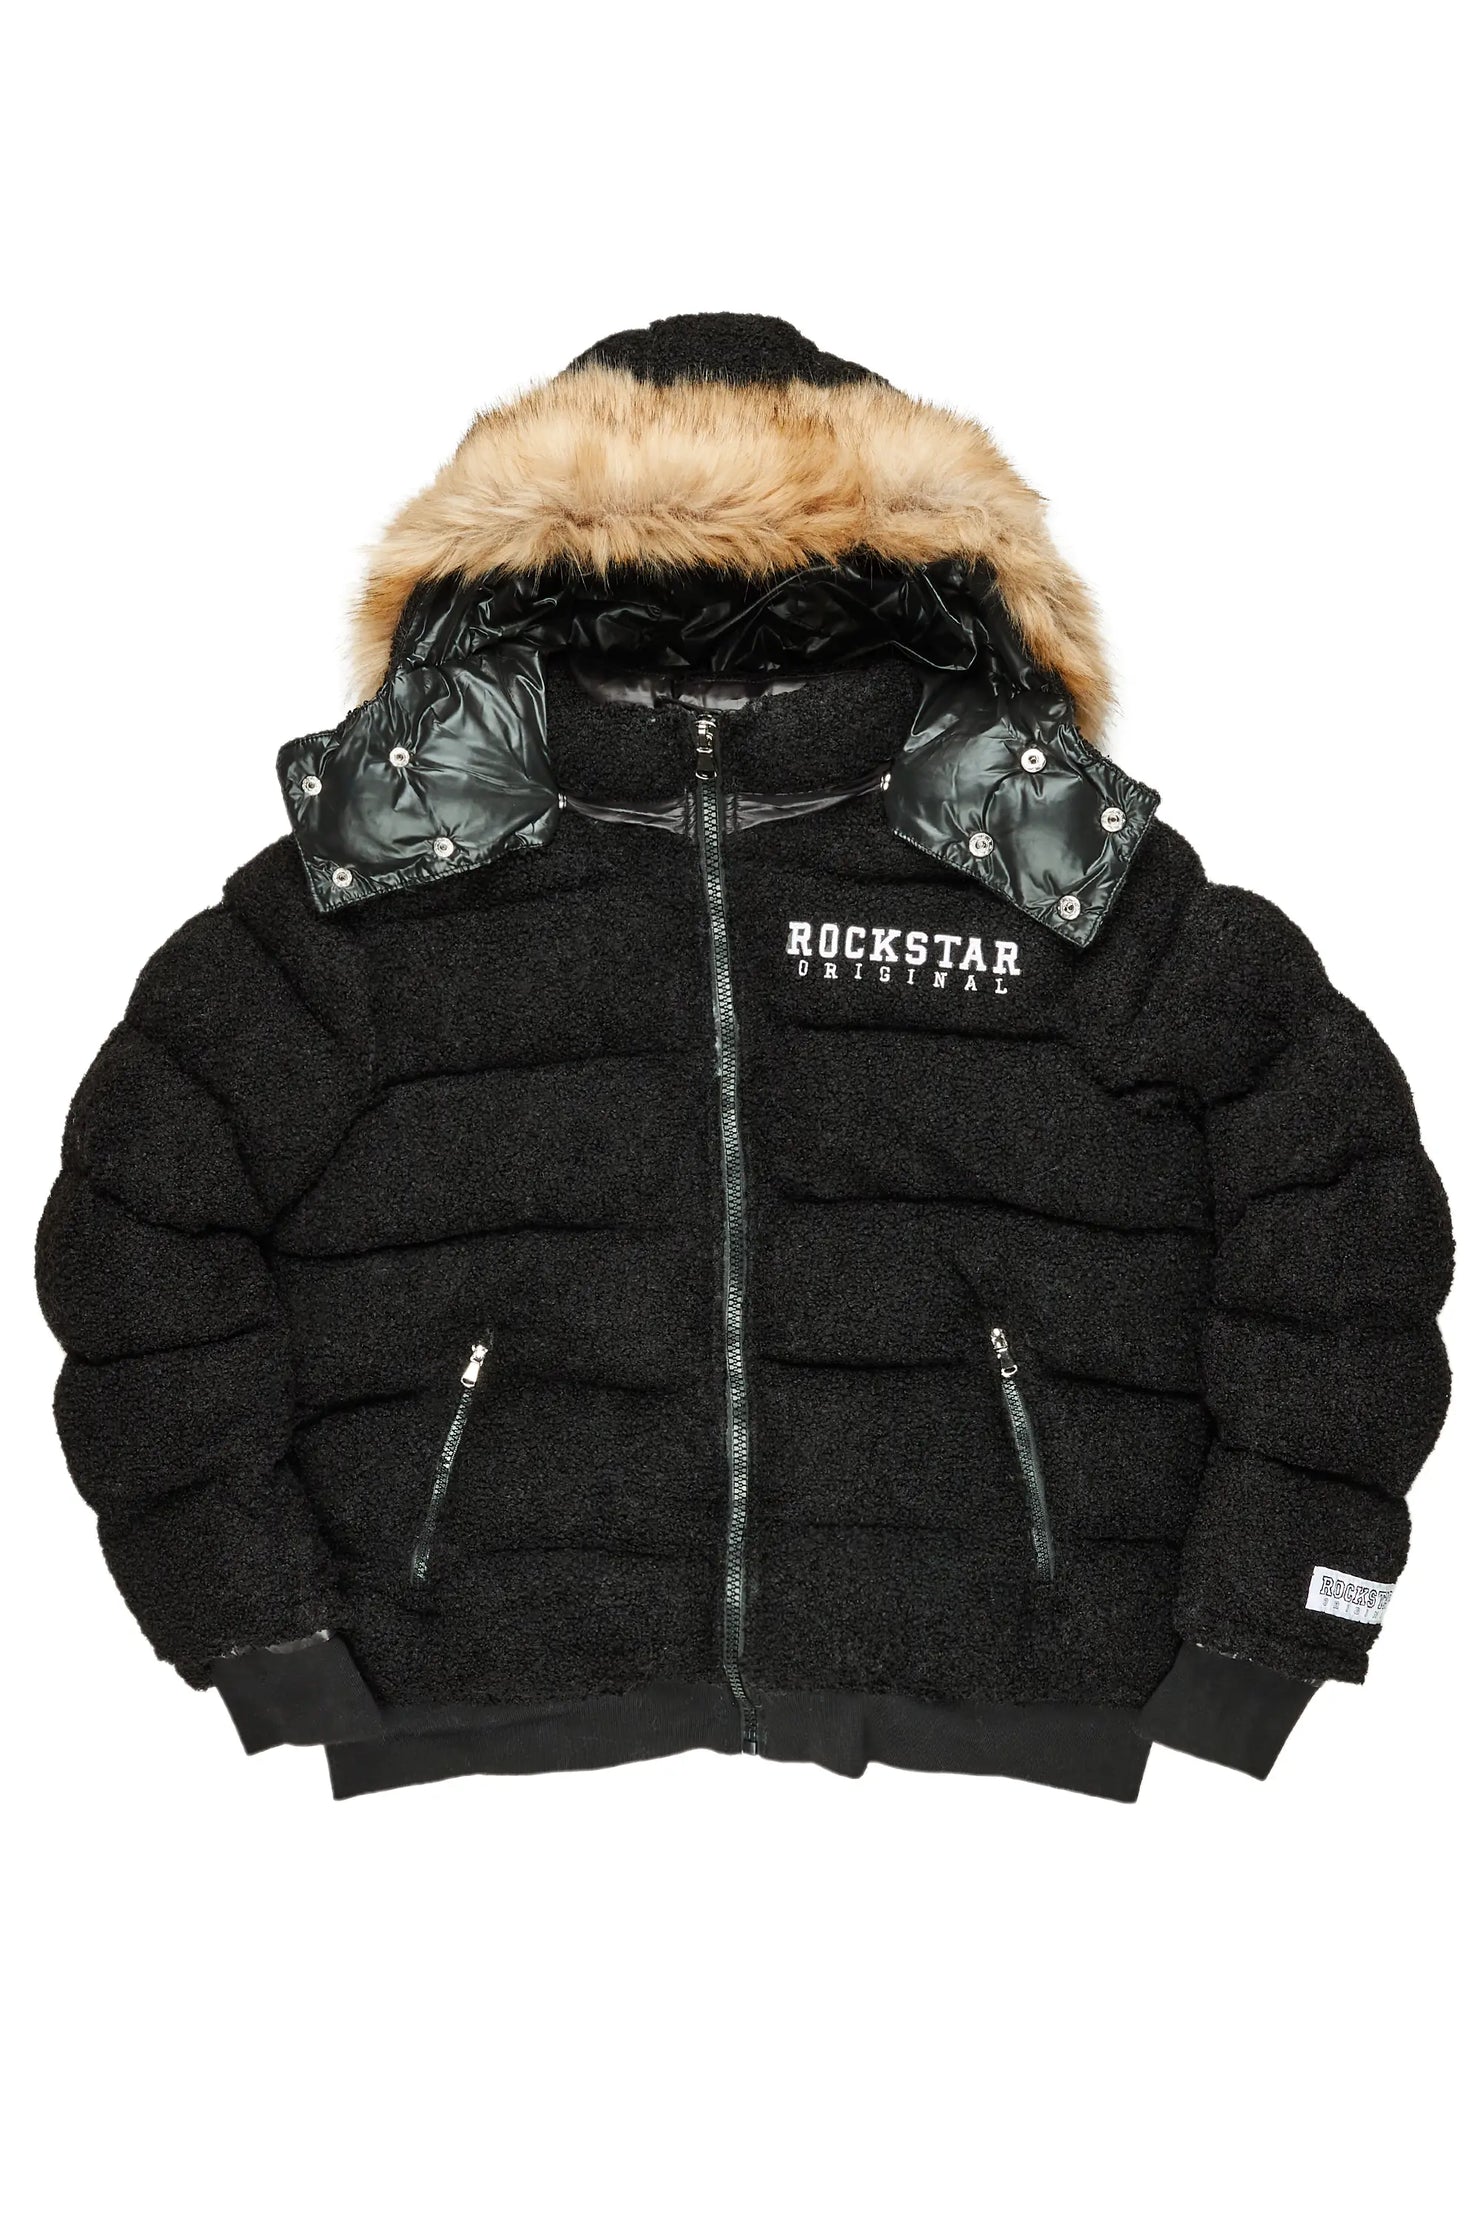 Kesia Black Puffer Jacket